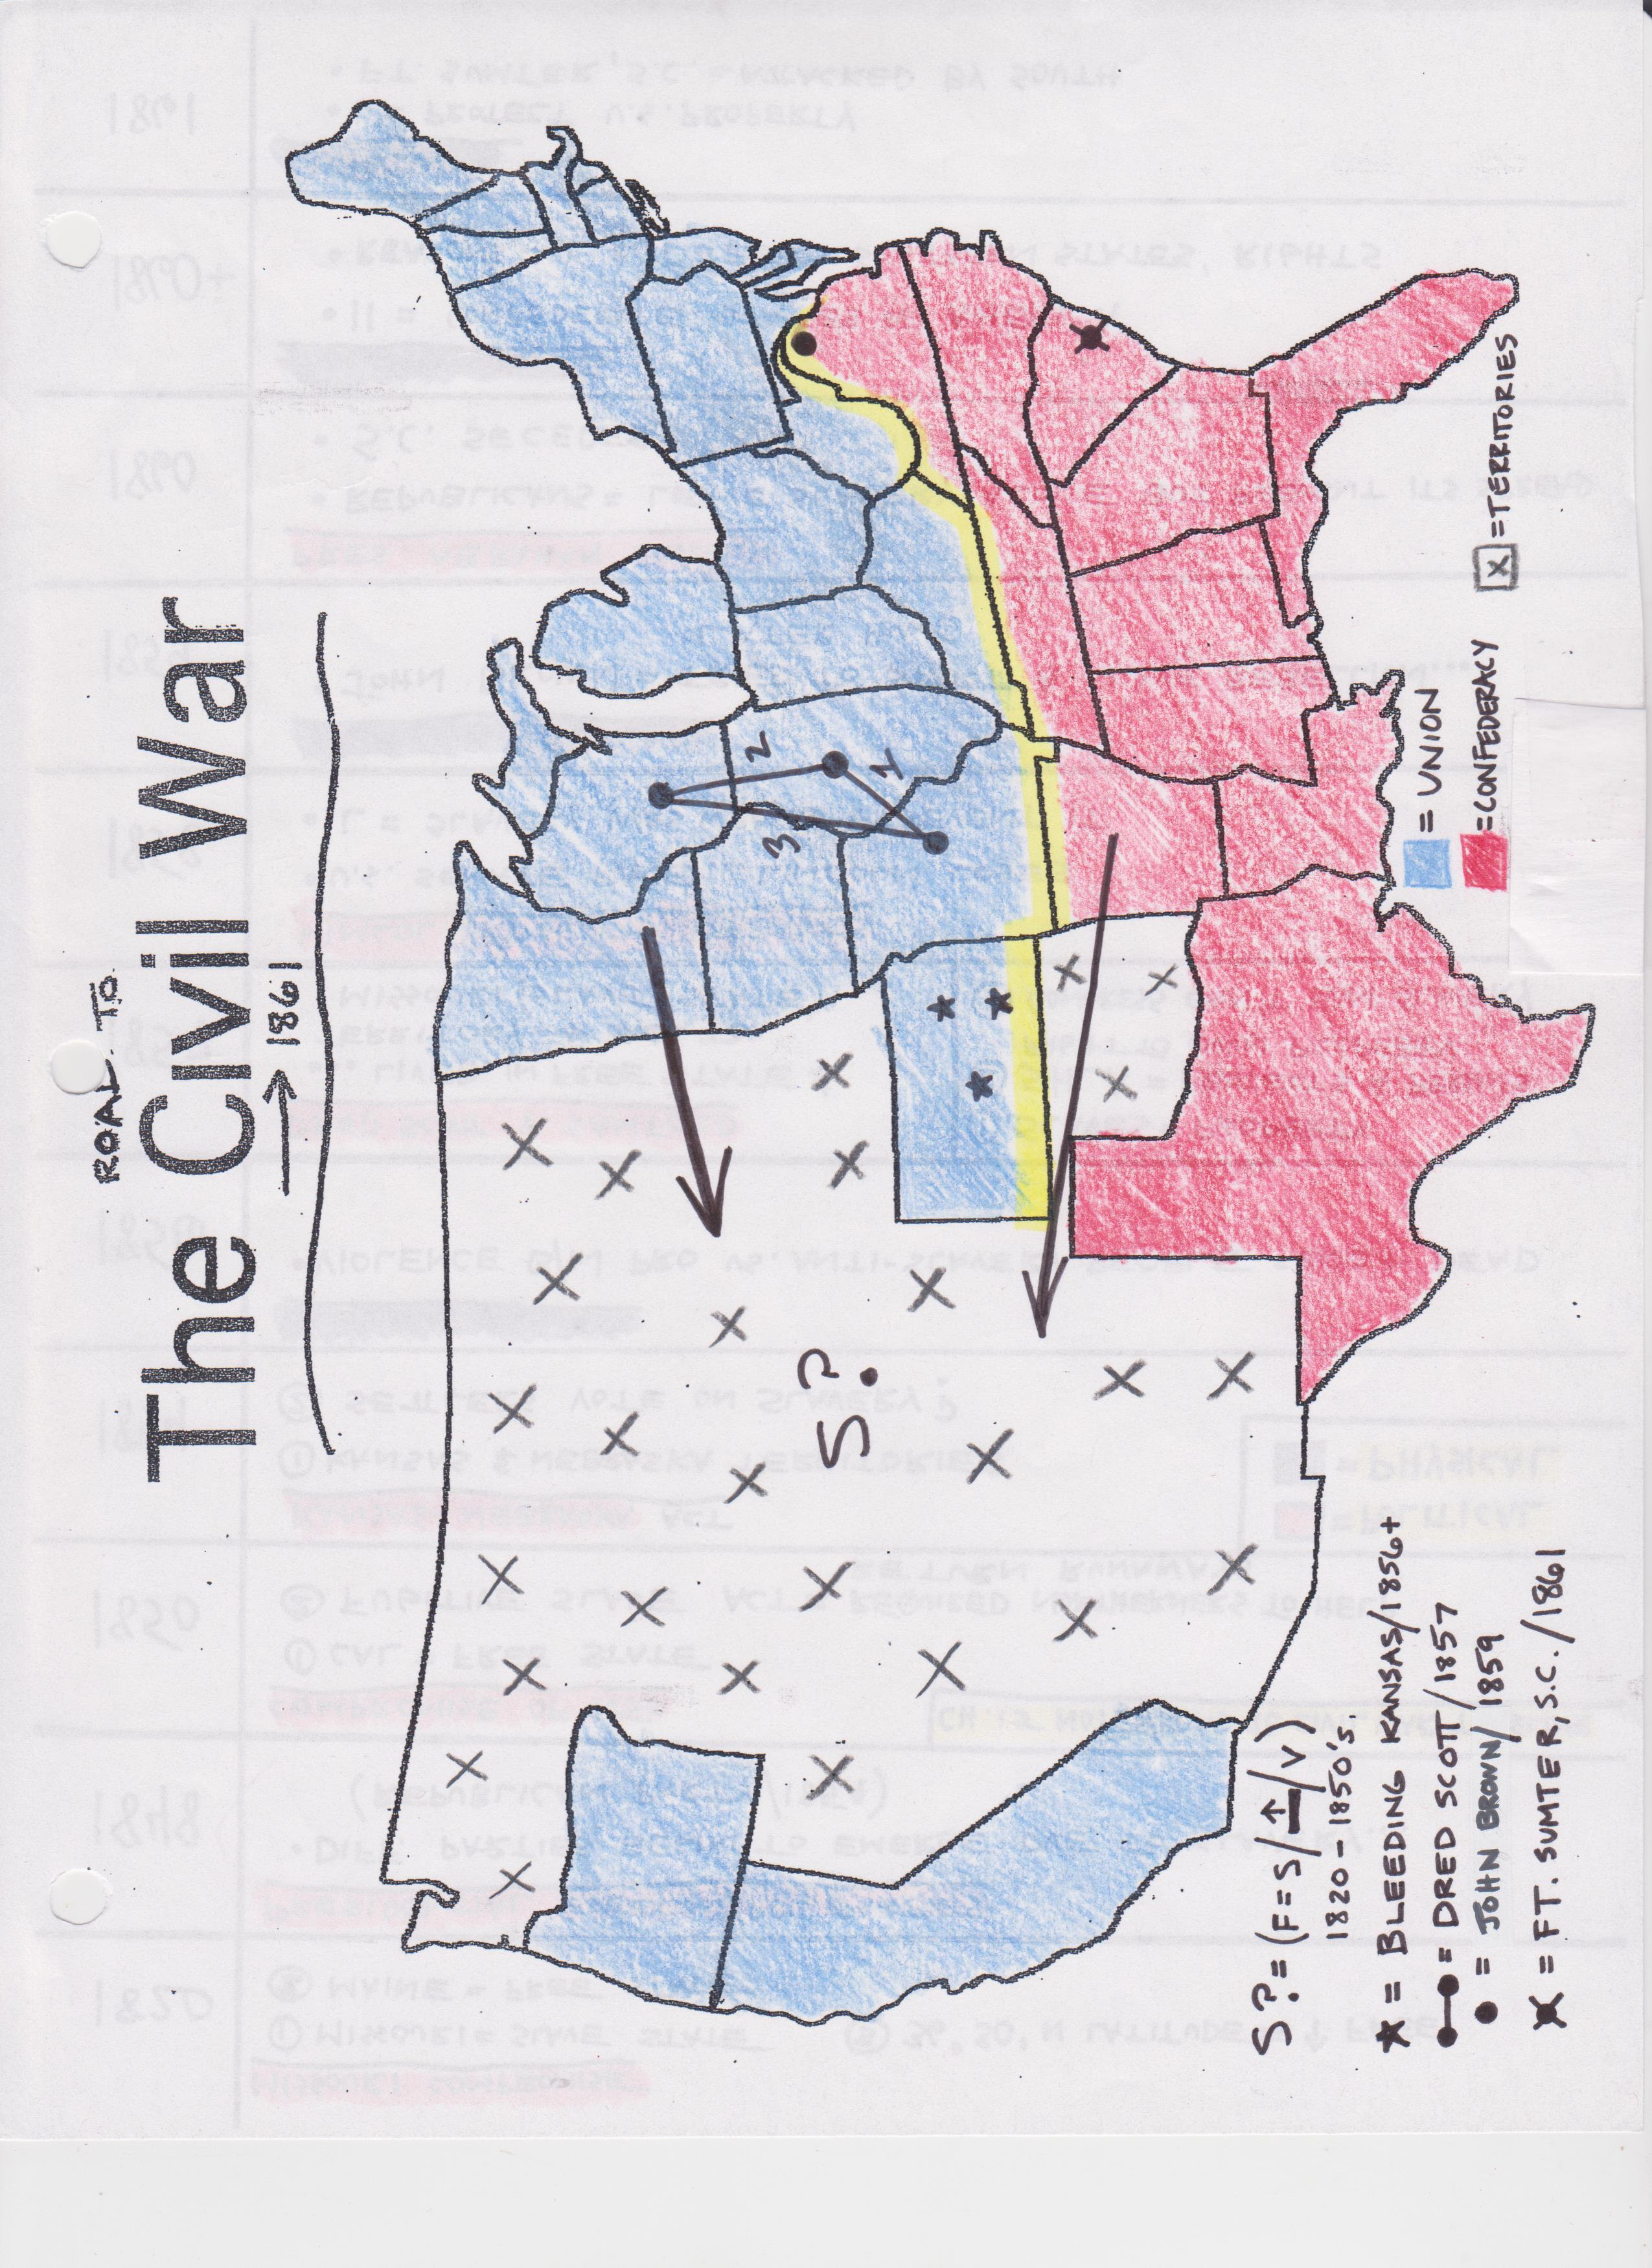 civil-war-map-worksheet-answers-free-download-goodimg-co